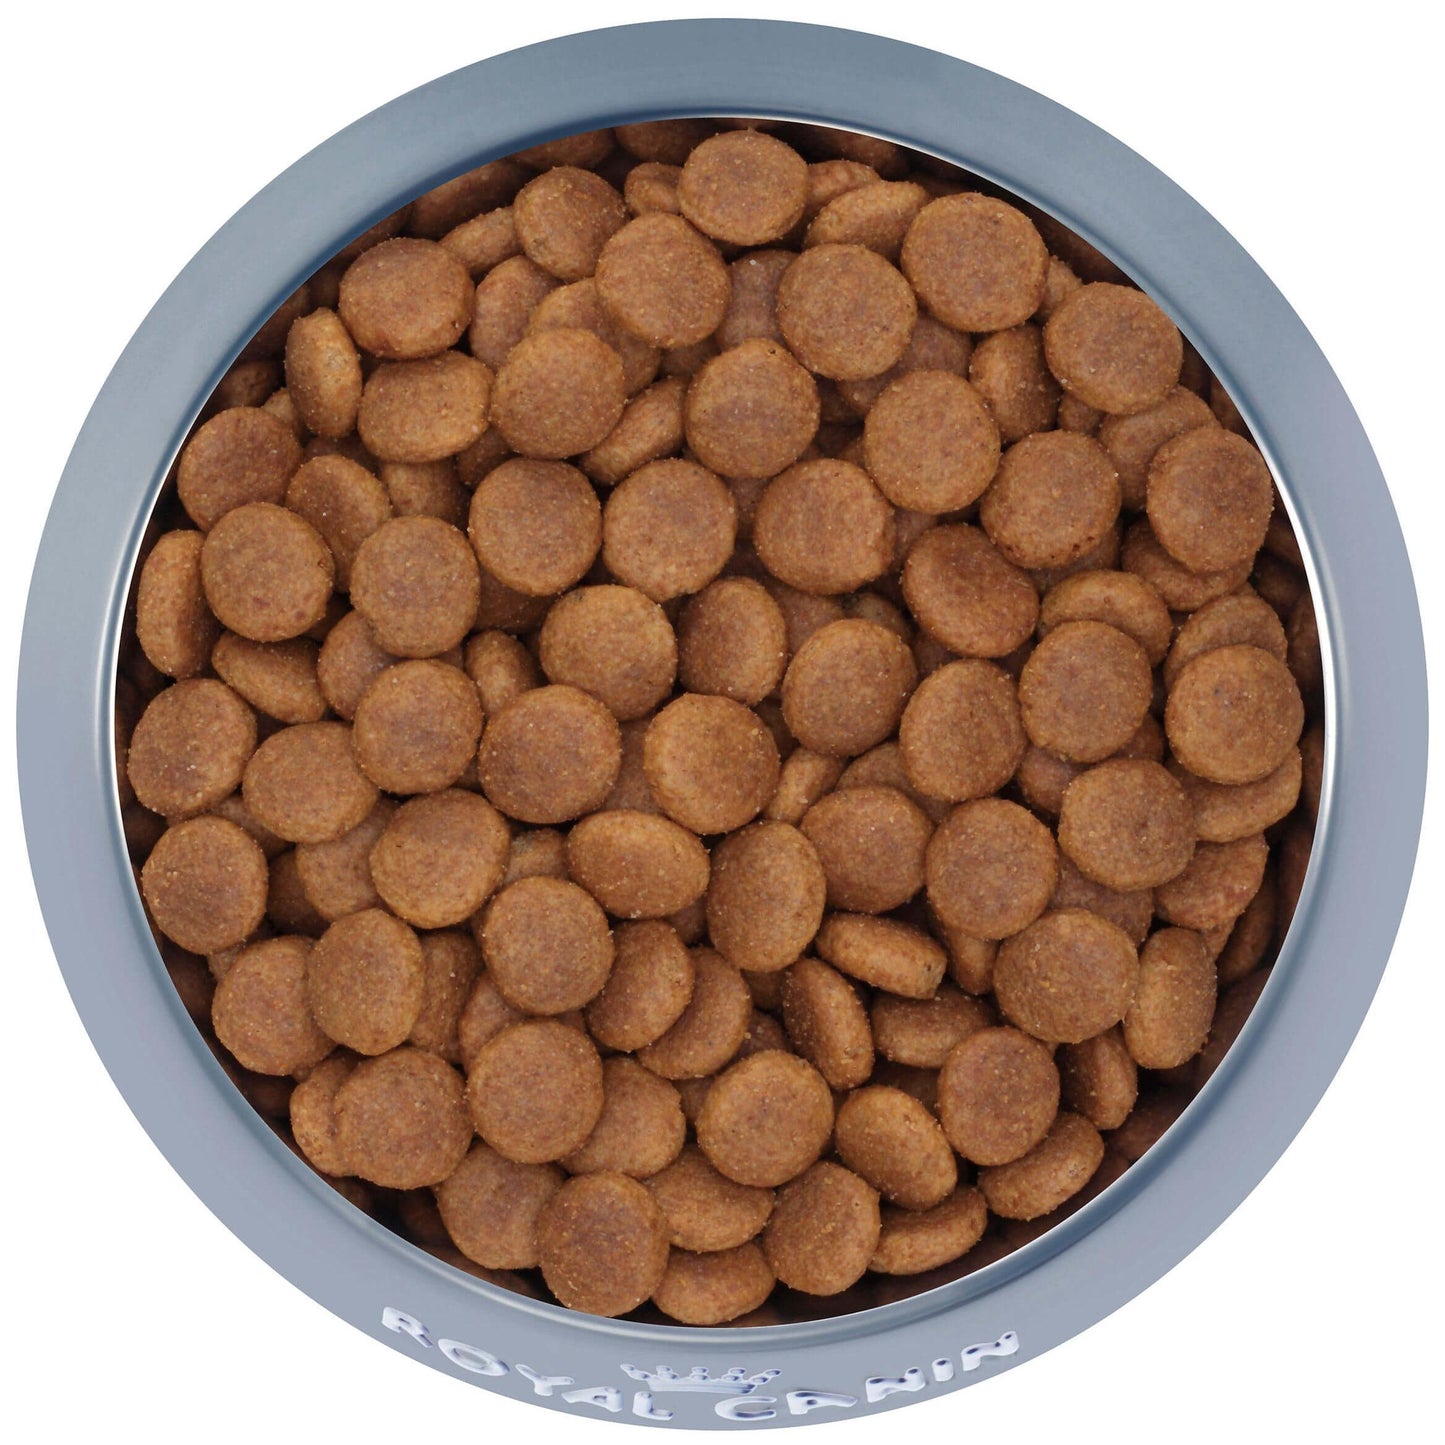 Royal Canin Medium Dry Dog Food